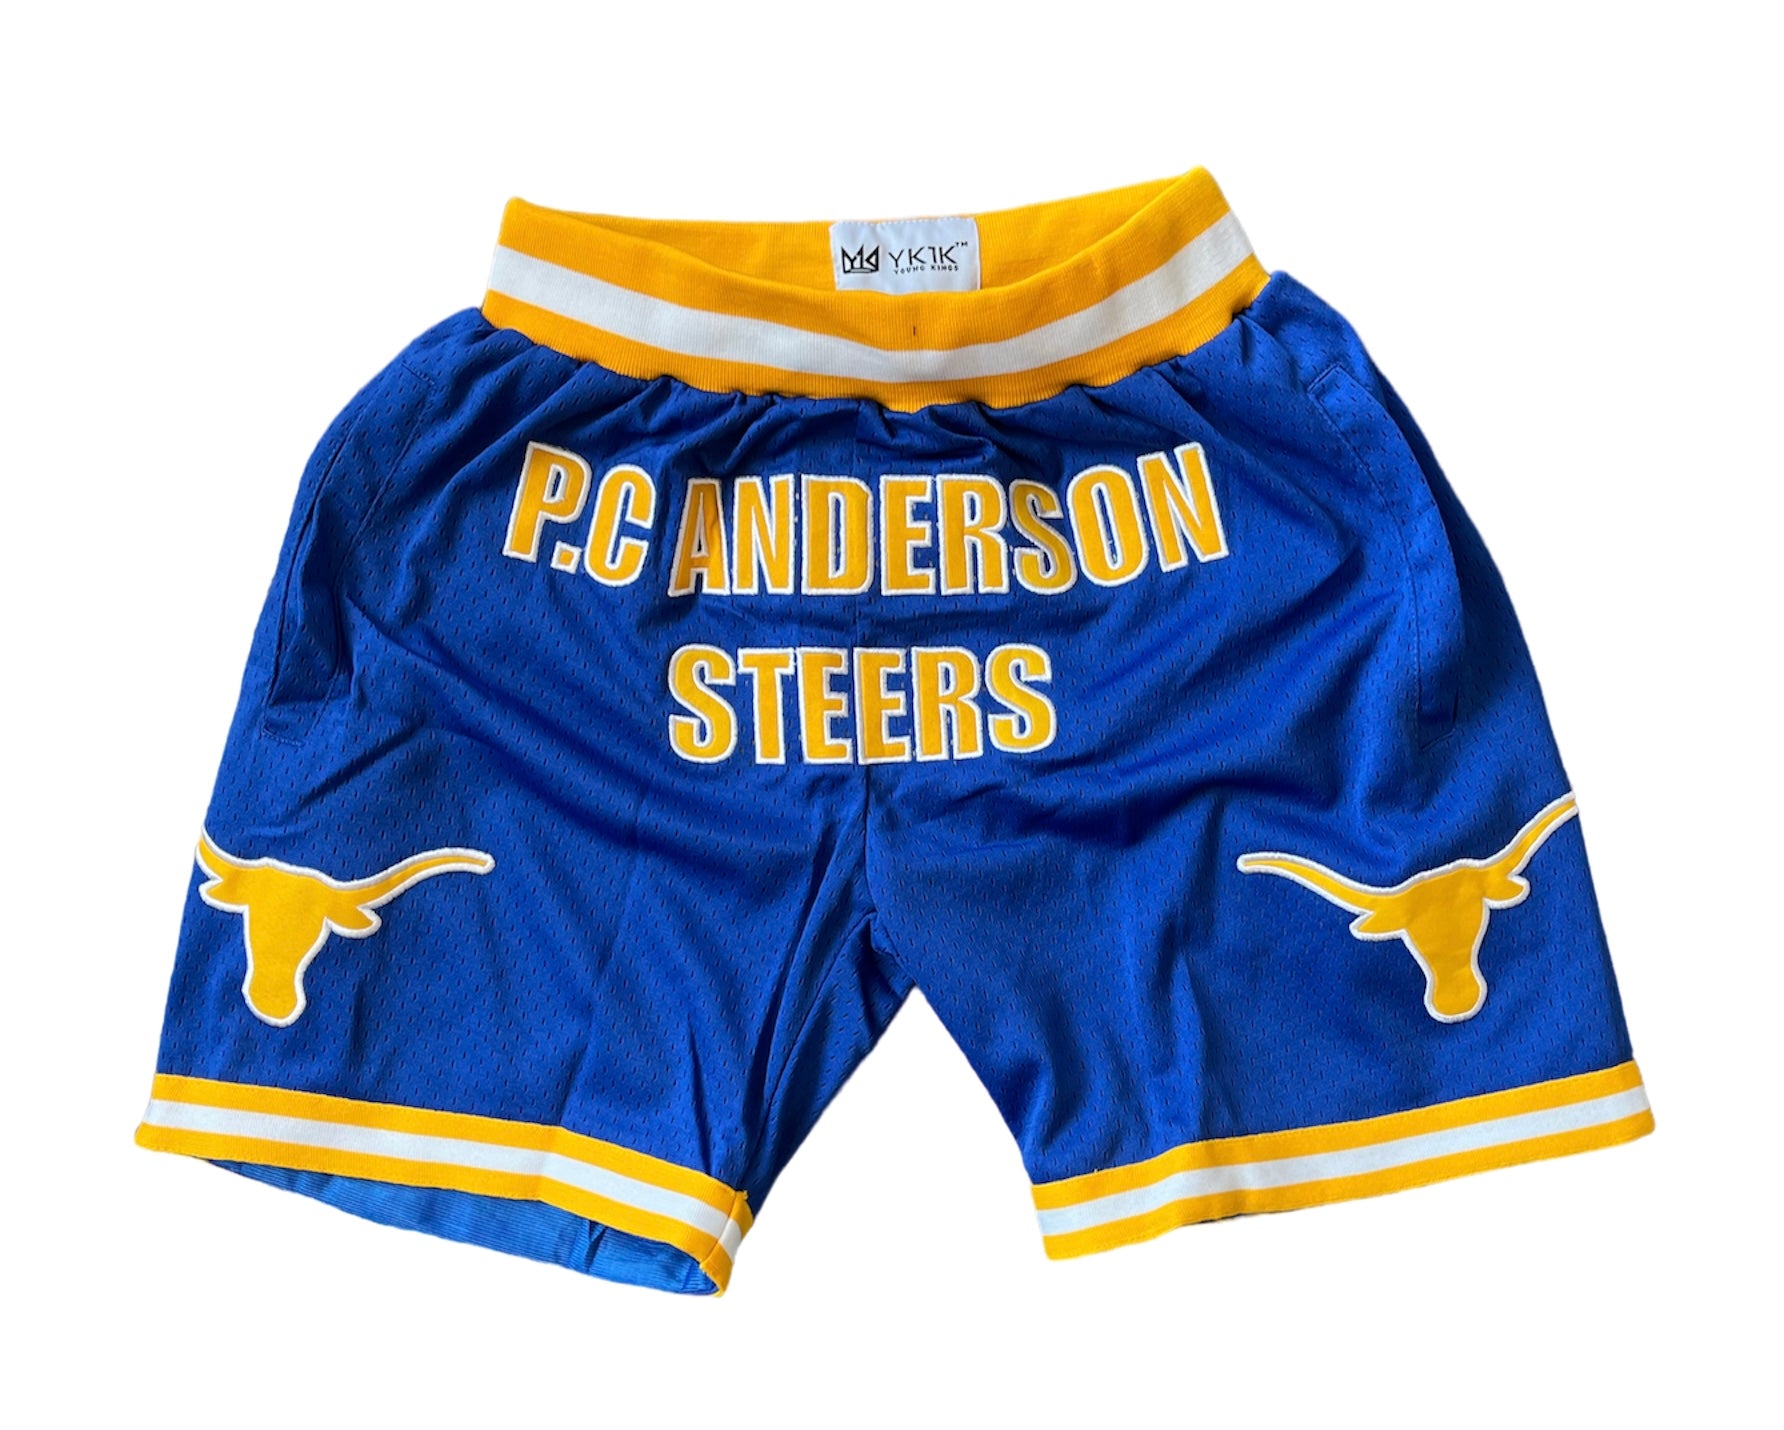 Golden State Warriors Blue JUST DON Shorts